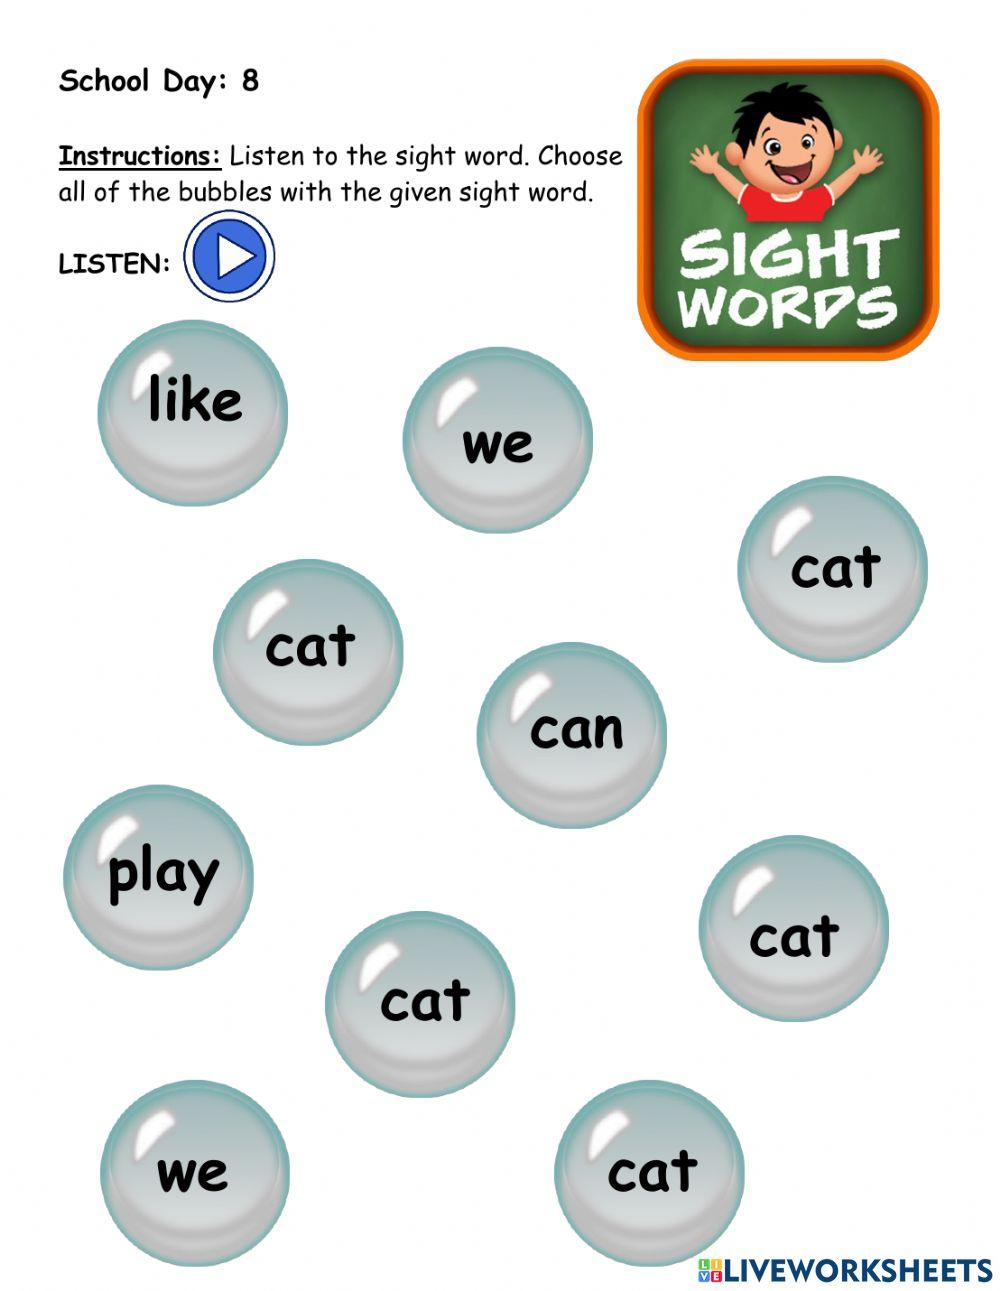 Sight word: cat